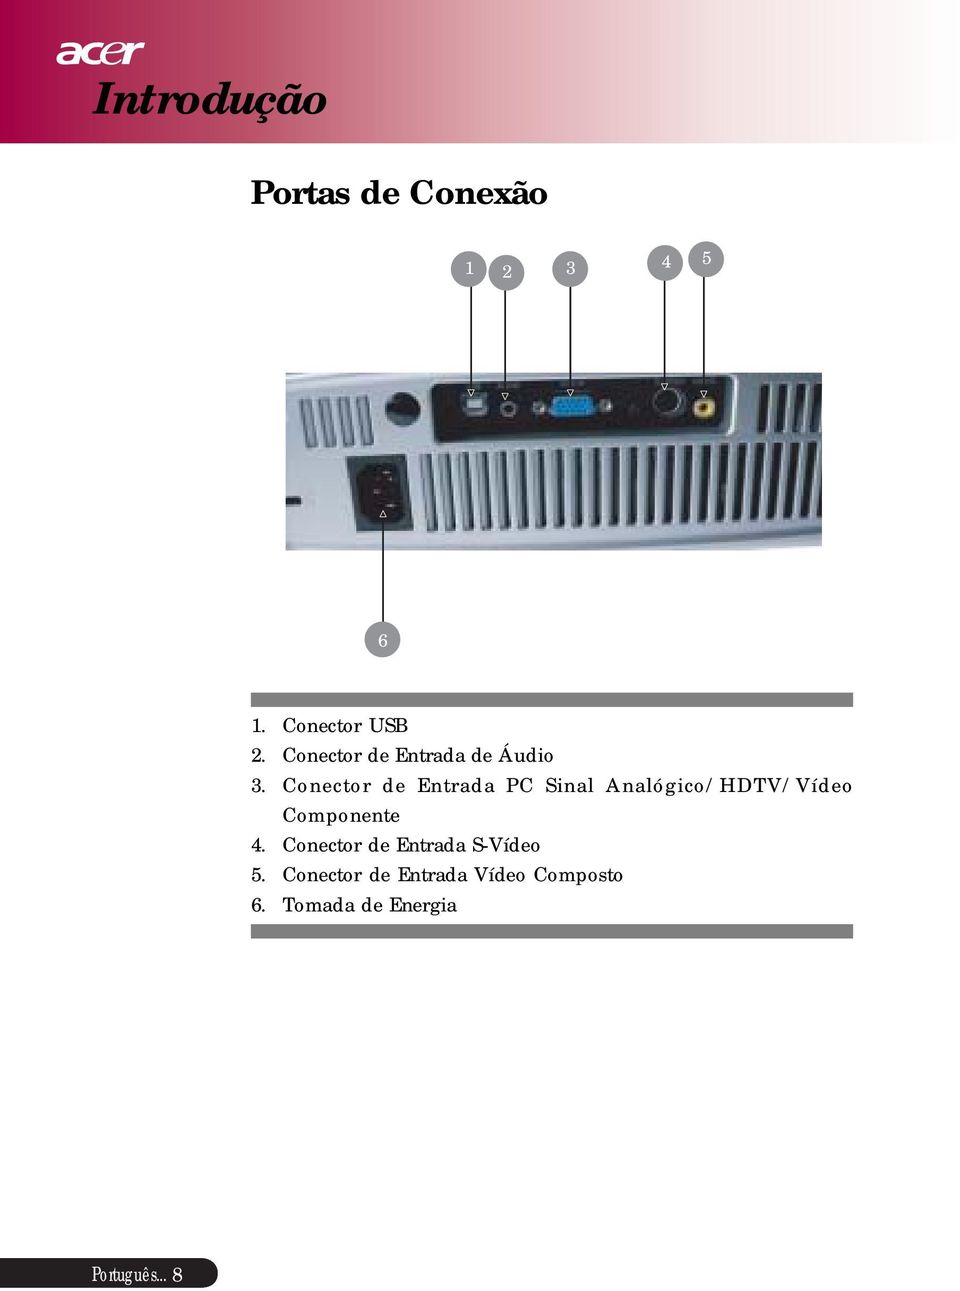 Conector de Entrada PC Sinal Analógico/HDTV/Vídeo Componente 4.